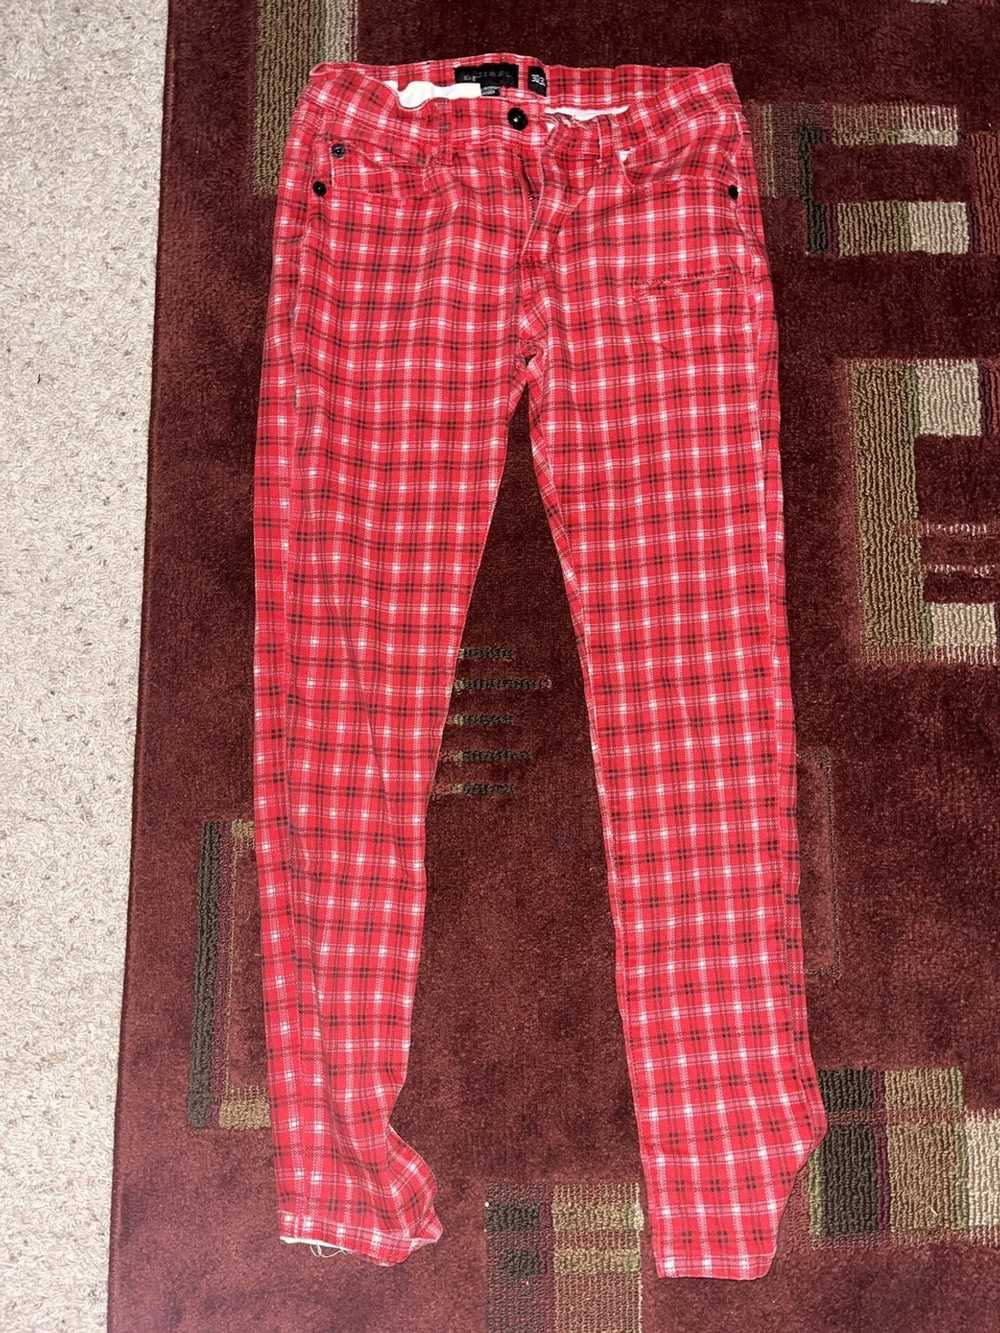 Decibel Red Checkered Pants - image 2